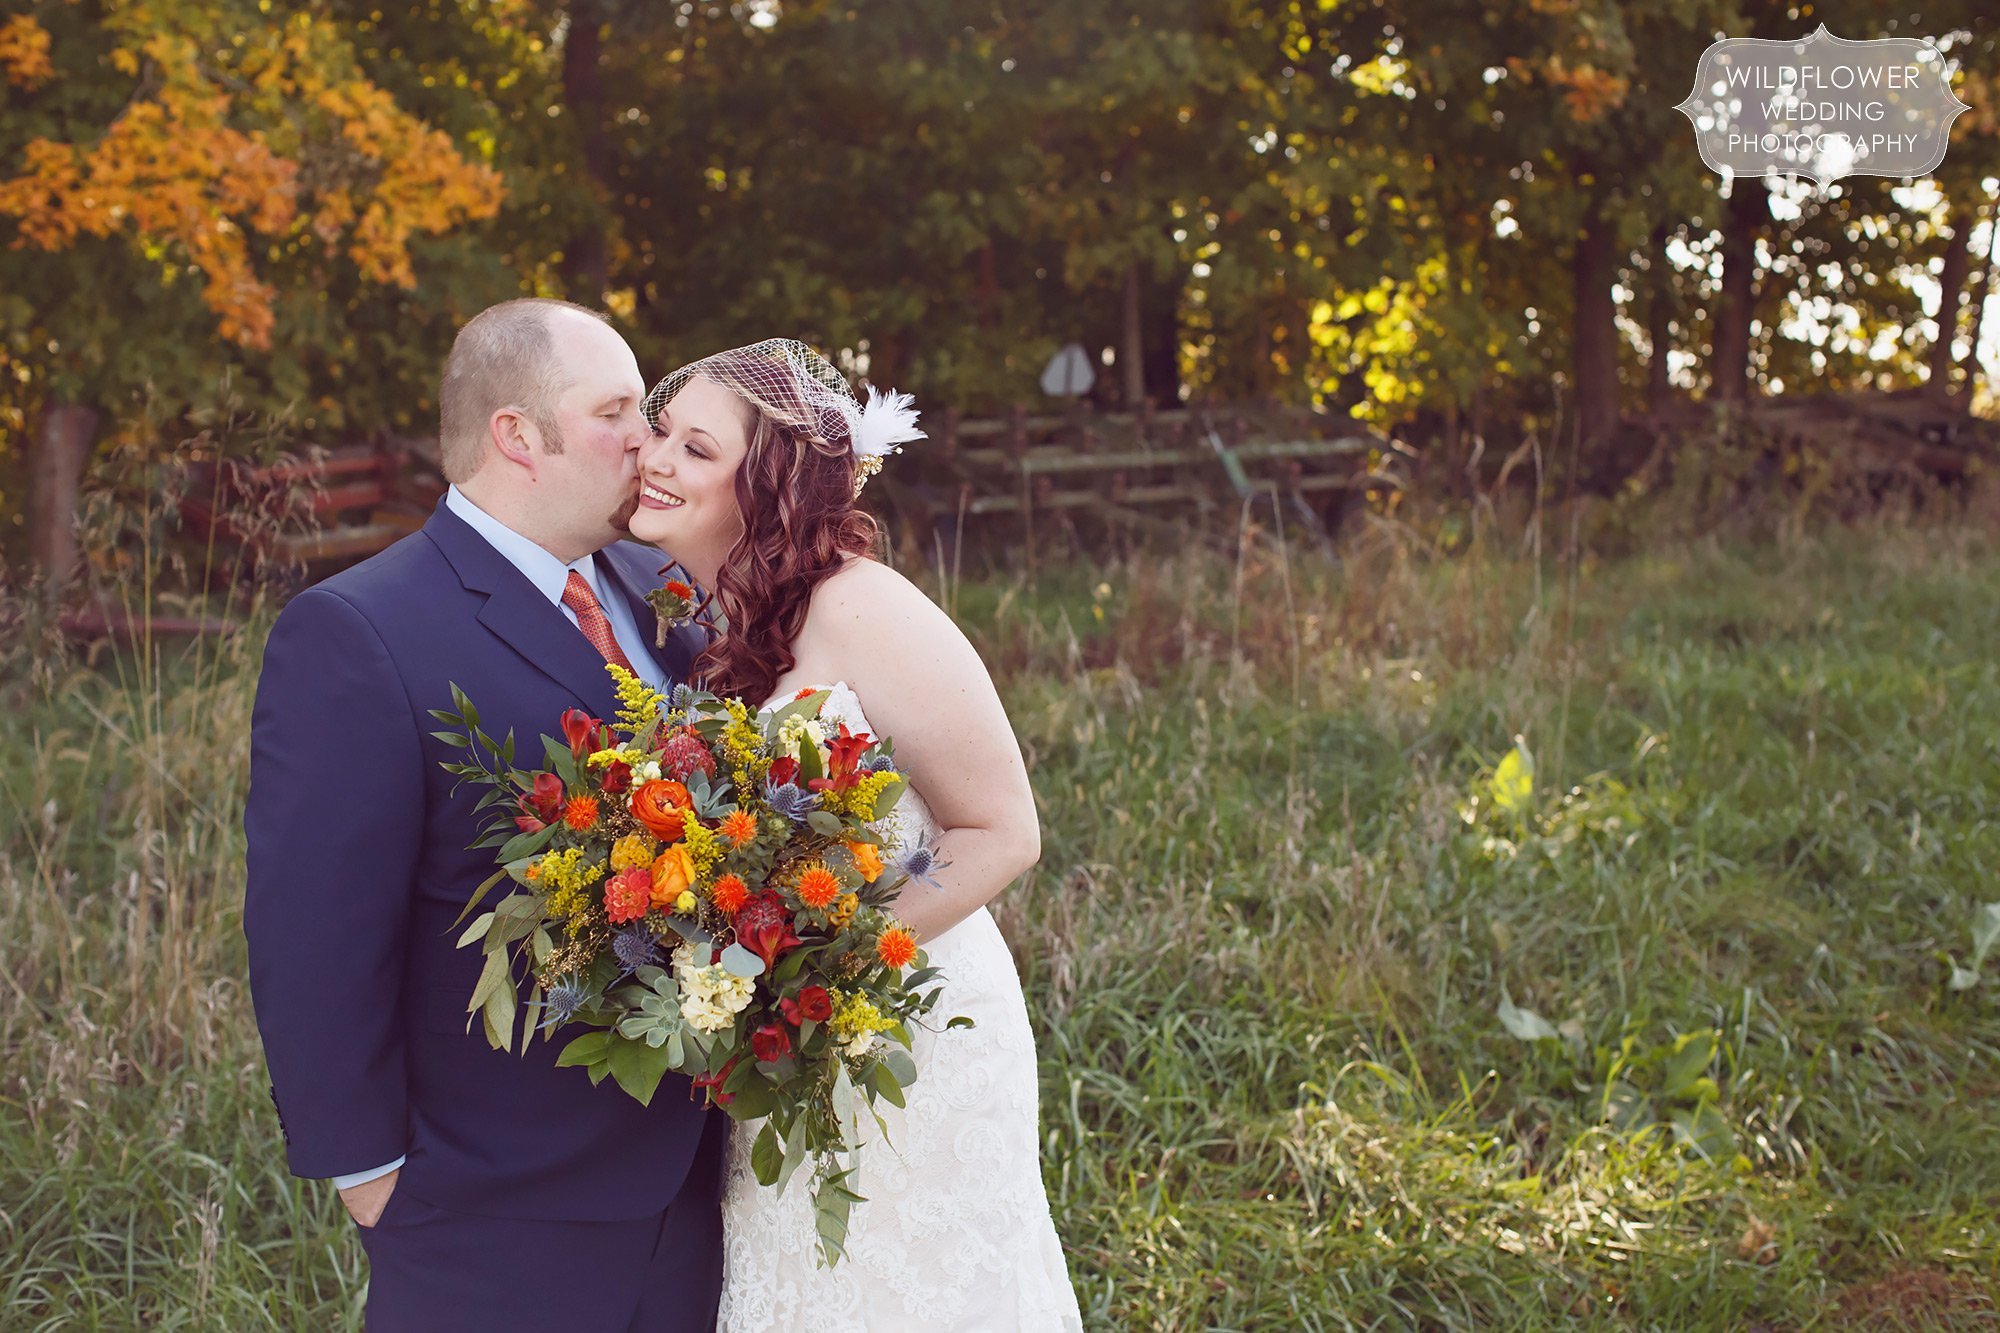 Sweet photo of the groom kissing the bride's cheek at this rustic Kansas barn wedding.